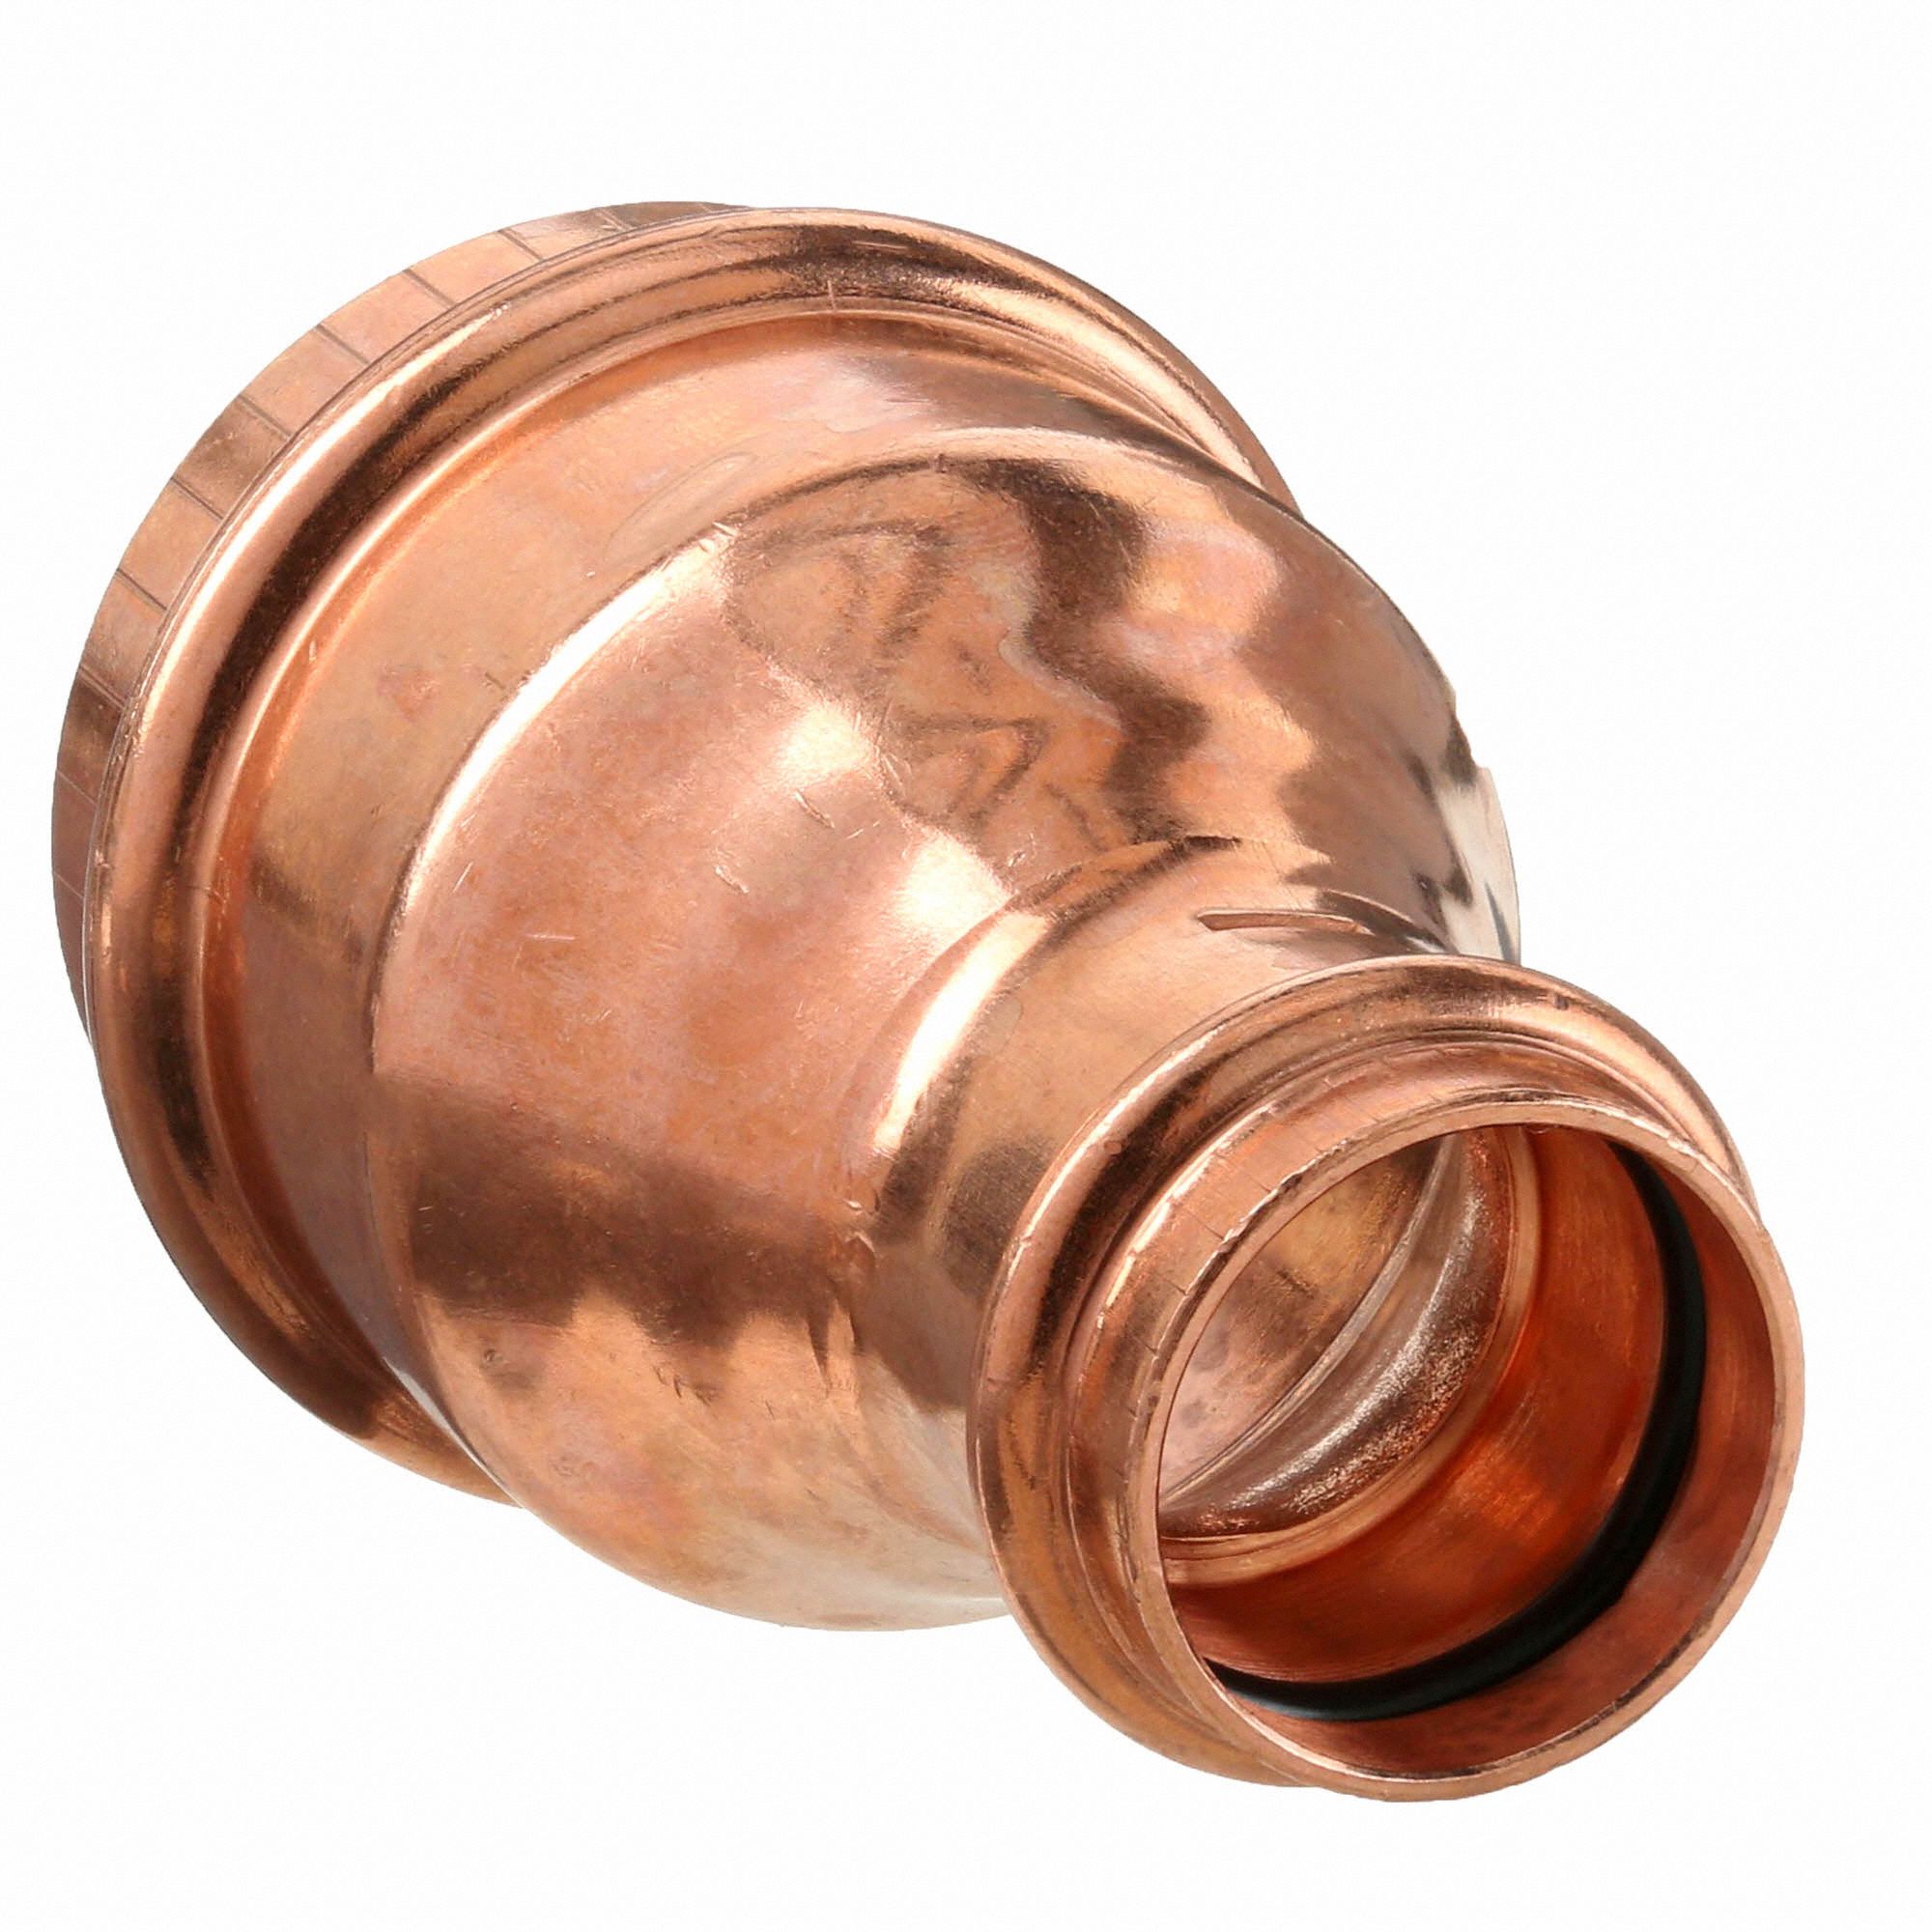 Viega 78107 1-1 2-inch x 4-inch Propress Copper Reducer Ftg C for sale online 